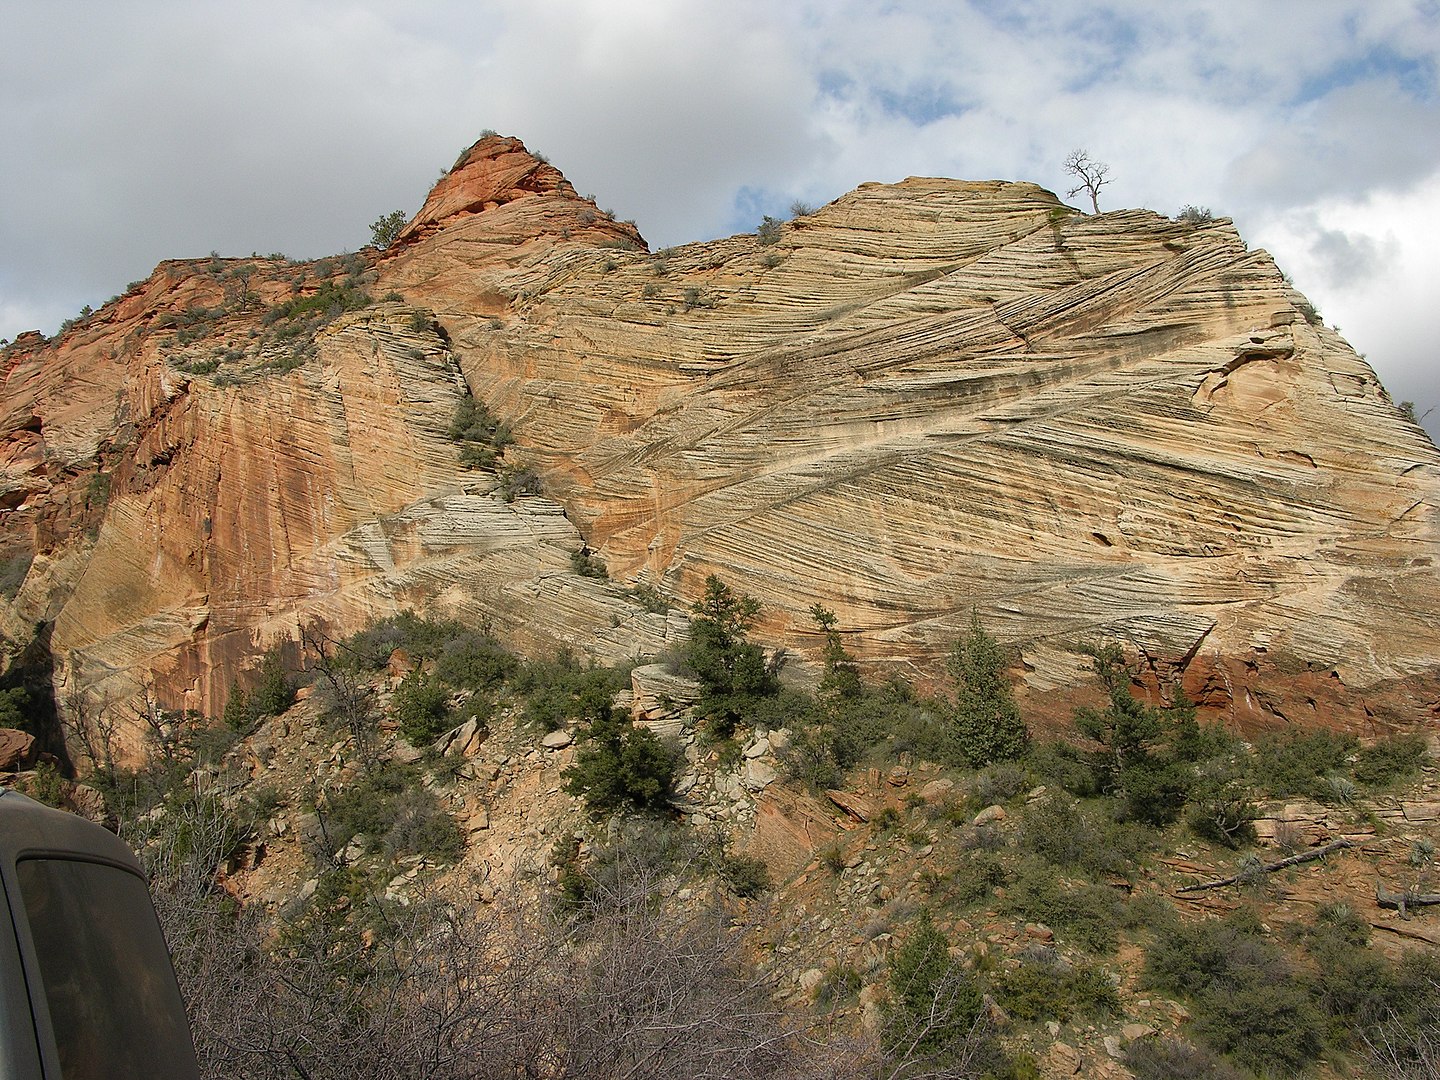 Cross-bedding of sandstone near Mt. Carmel road, Zion Canyon